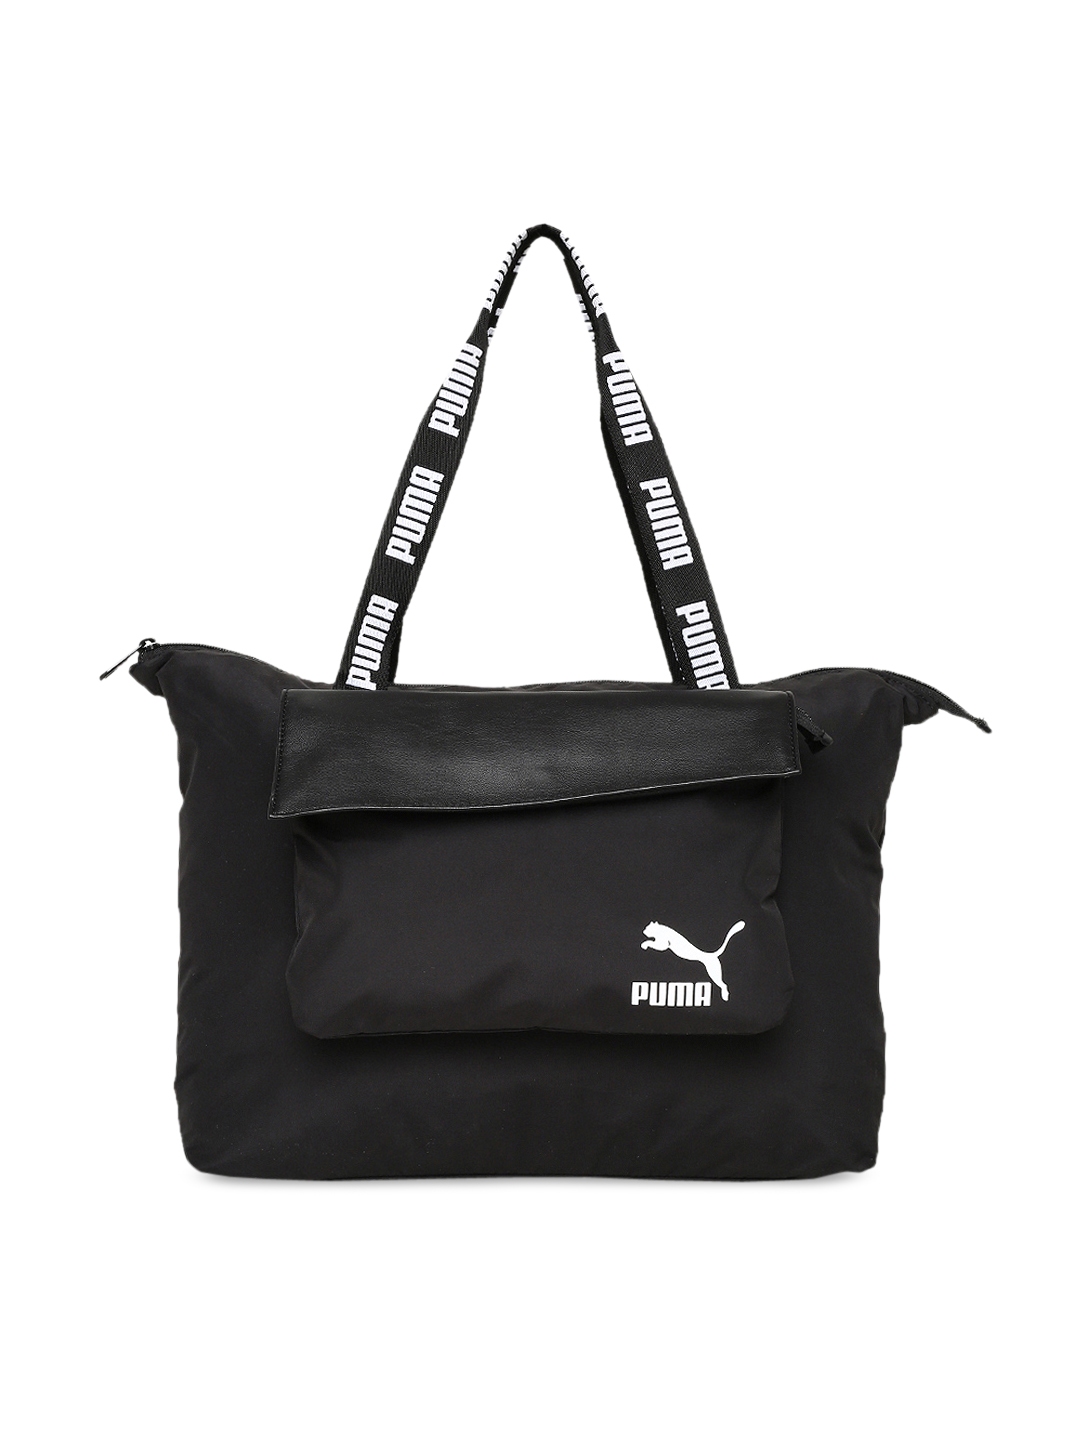 Buy Puma Black Solid Handheld Bag 